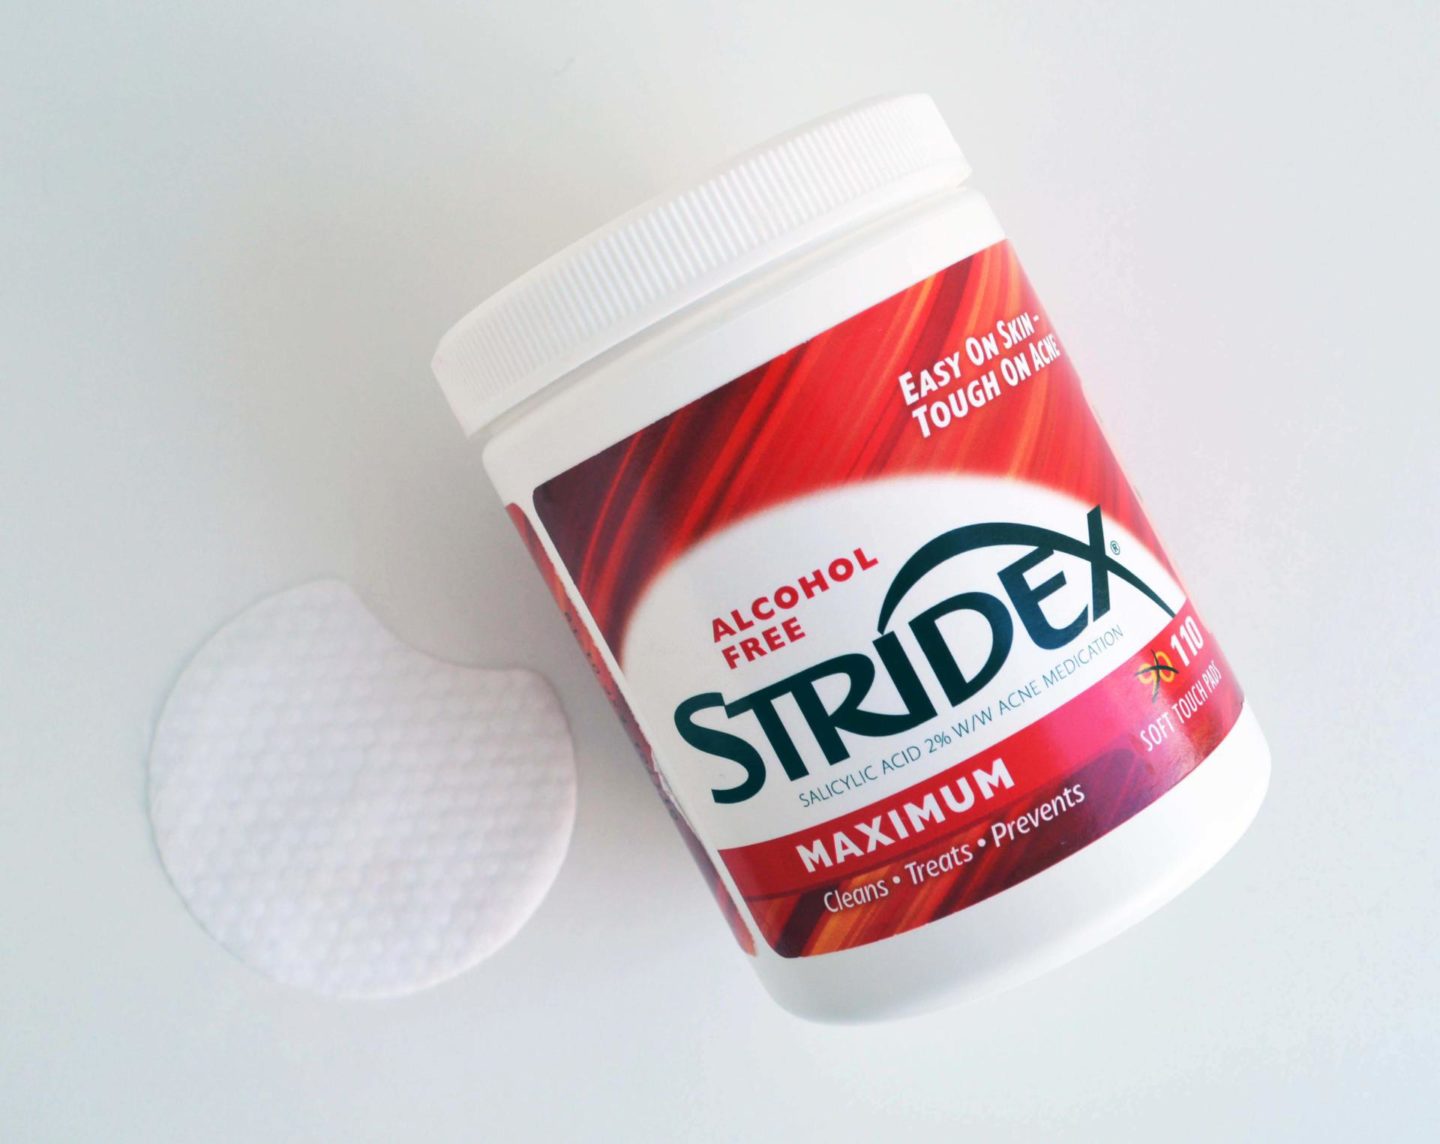 Stridex Maximum Strength Medicated Pads